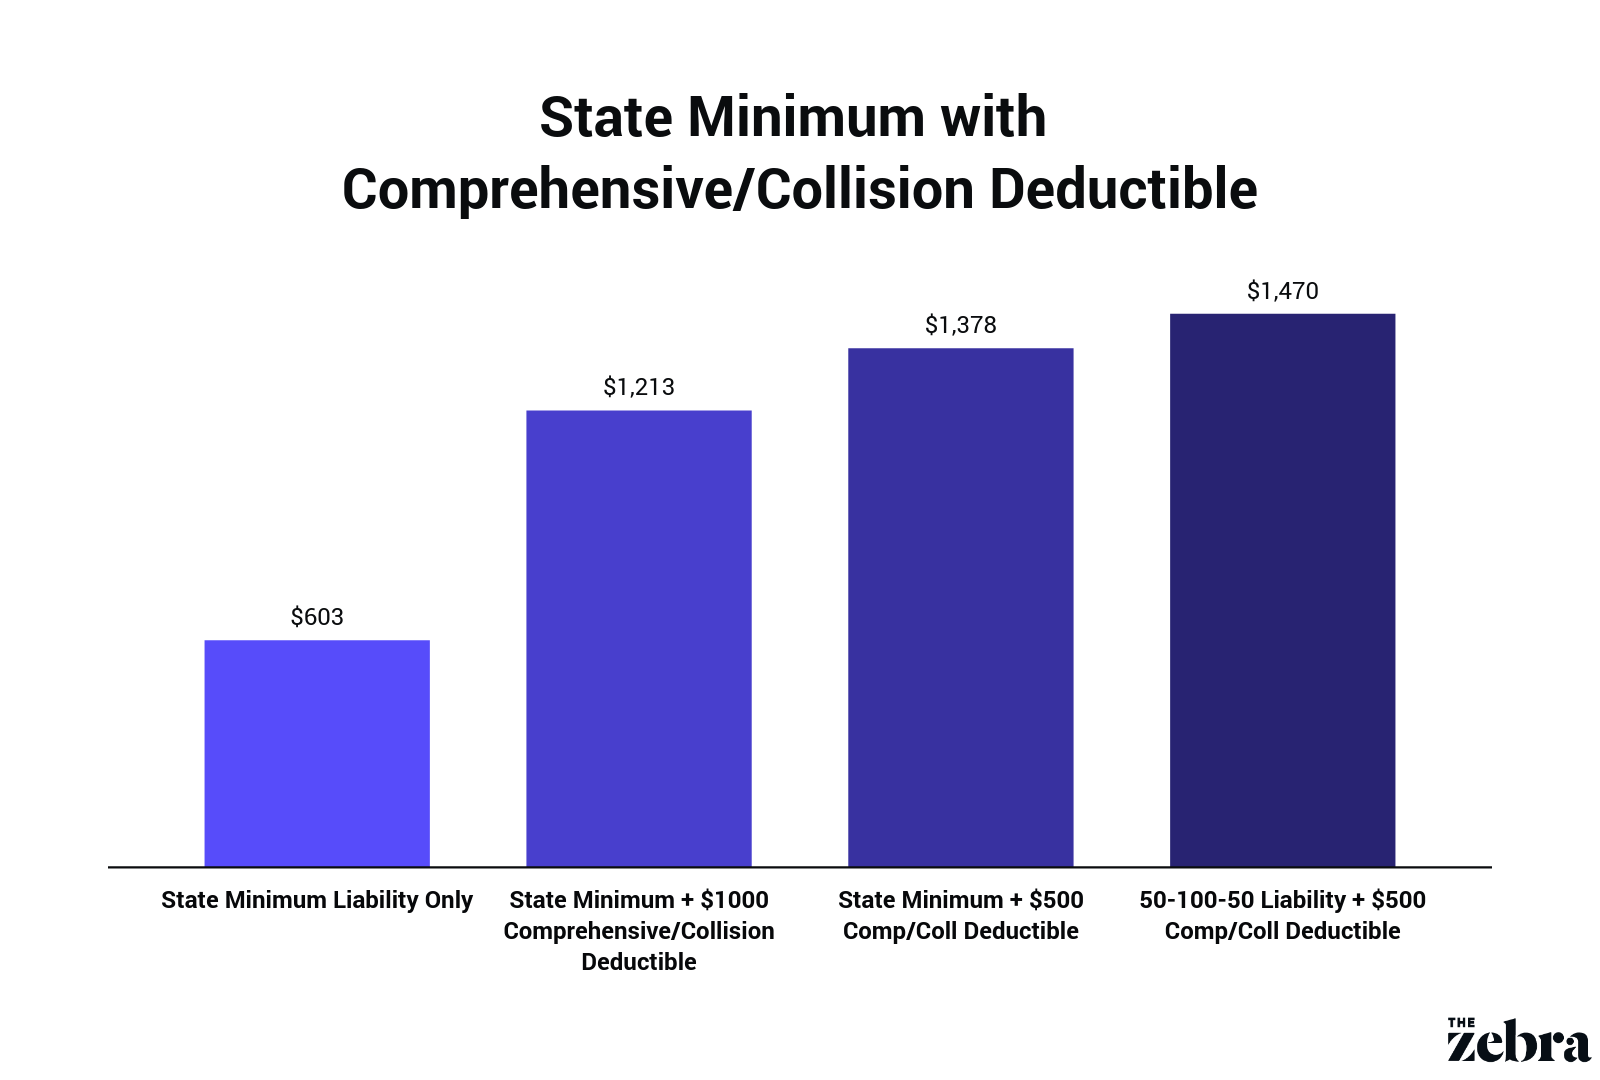 comprehensive/collision rates